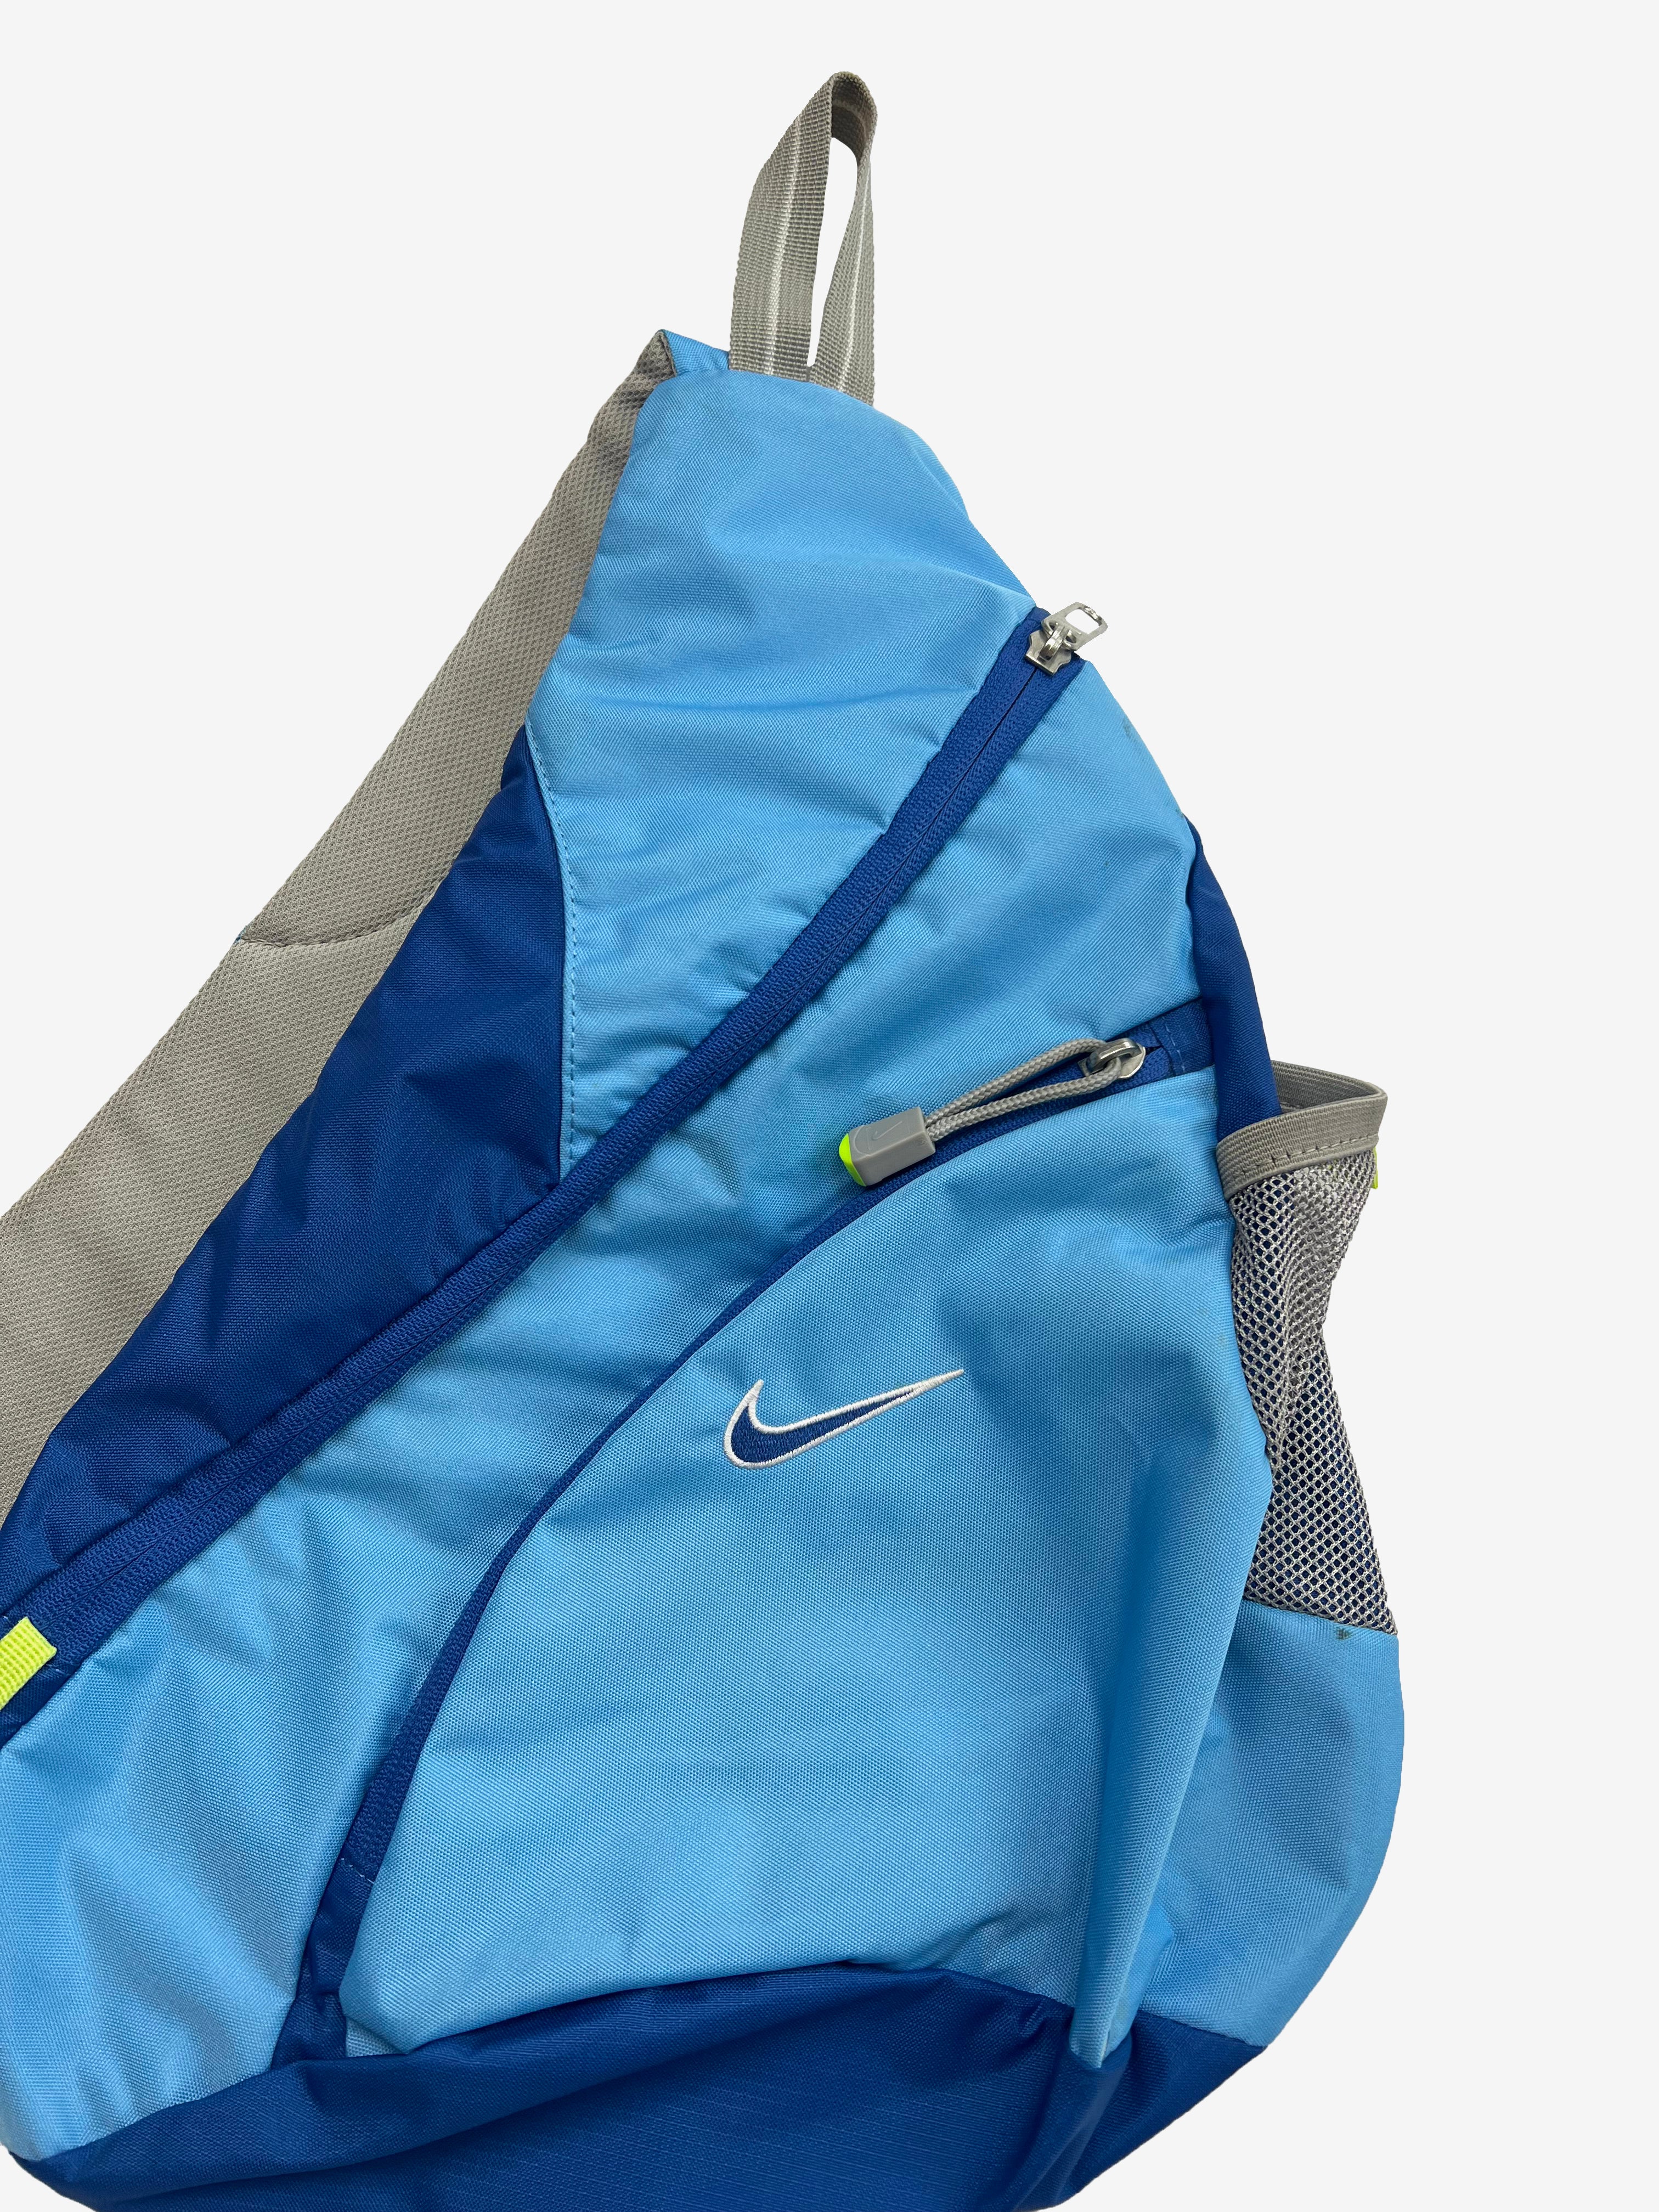 Nike Baby Blue Sling/Crossbody Bag 00's